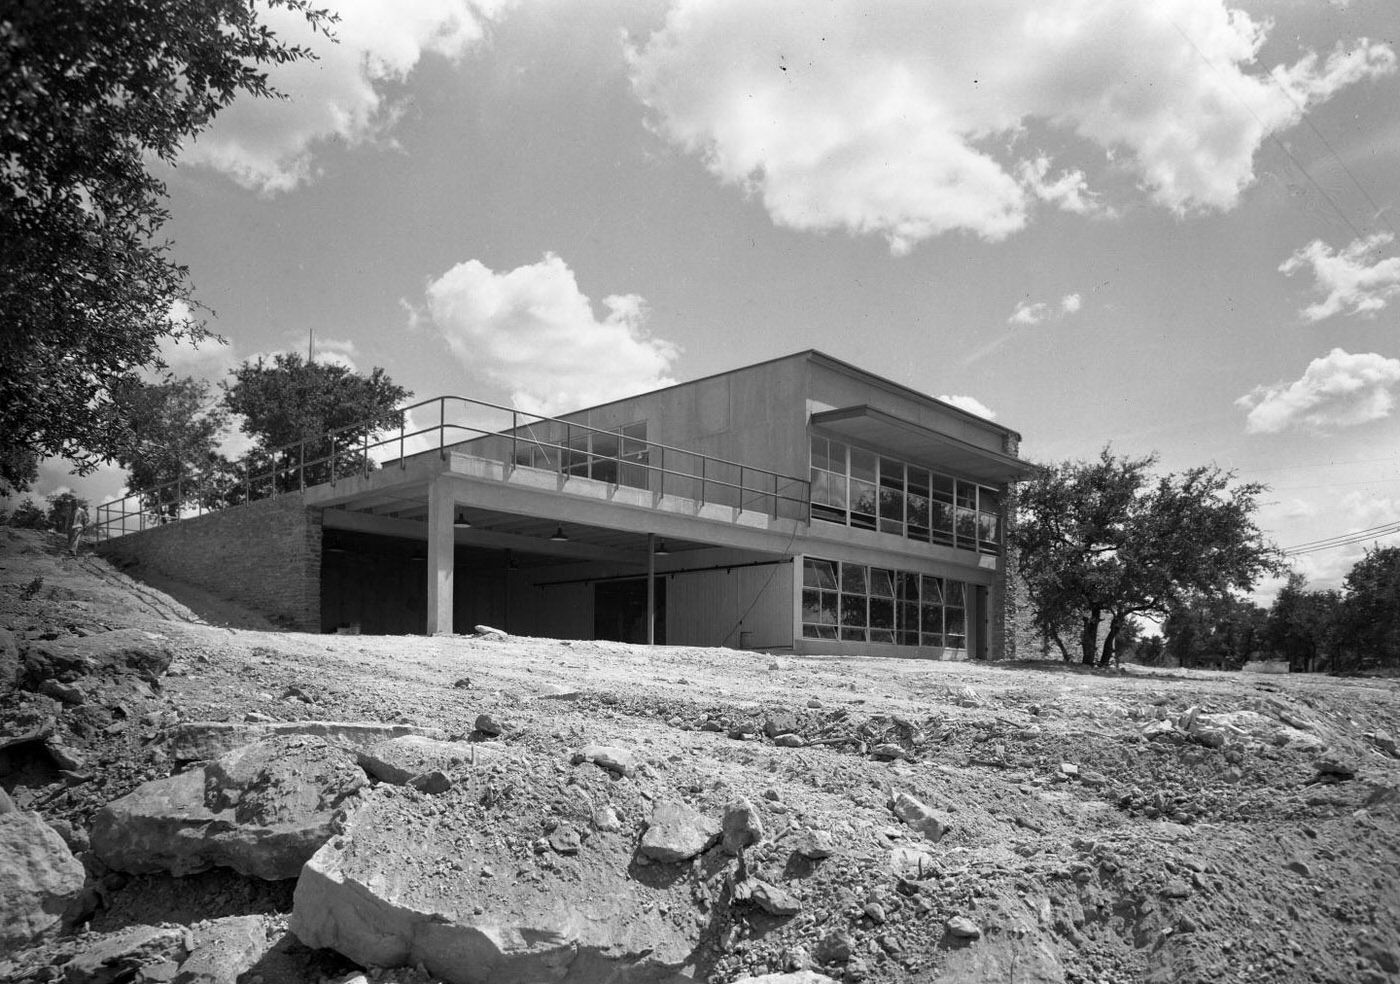 Construction at St. Stephen's Episcopal School, 1950.